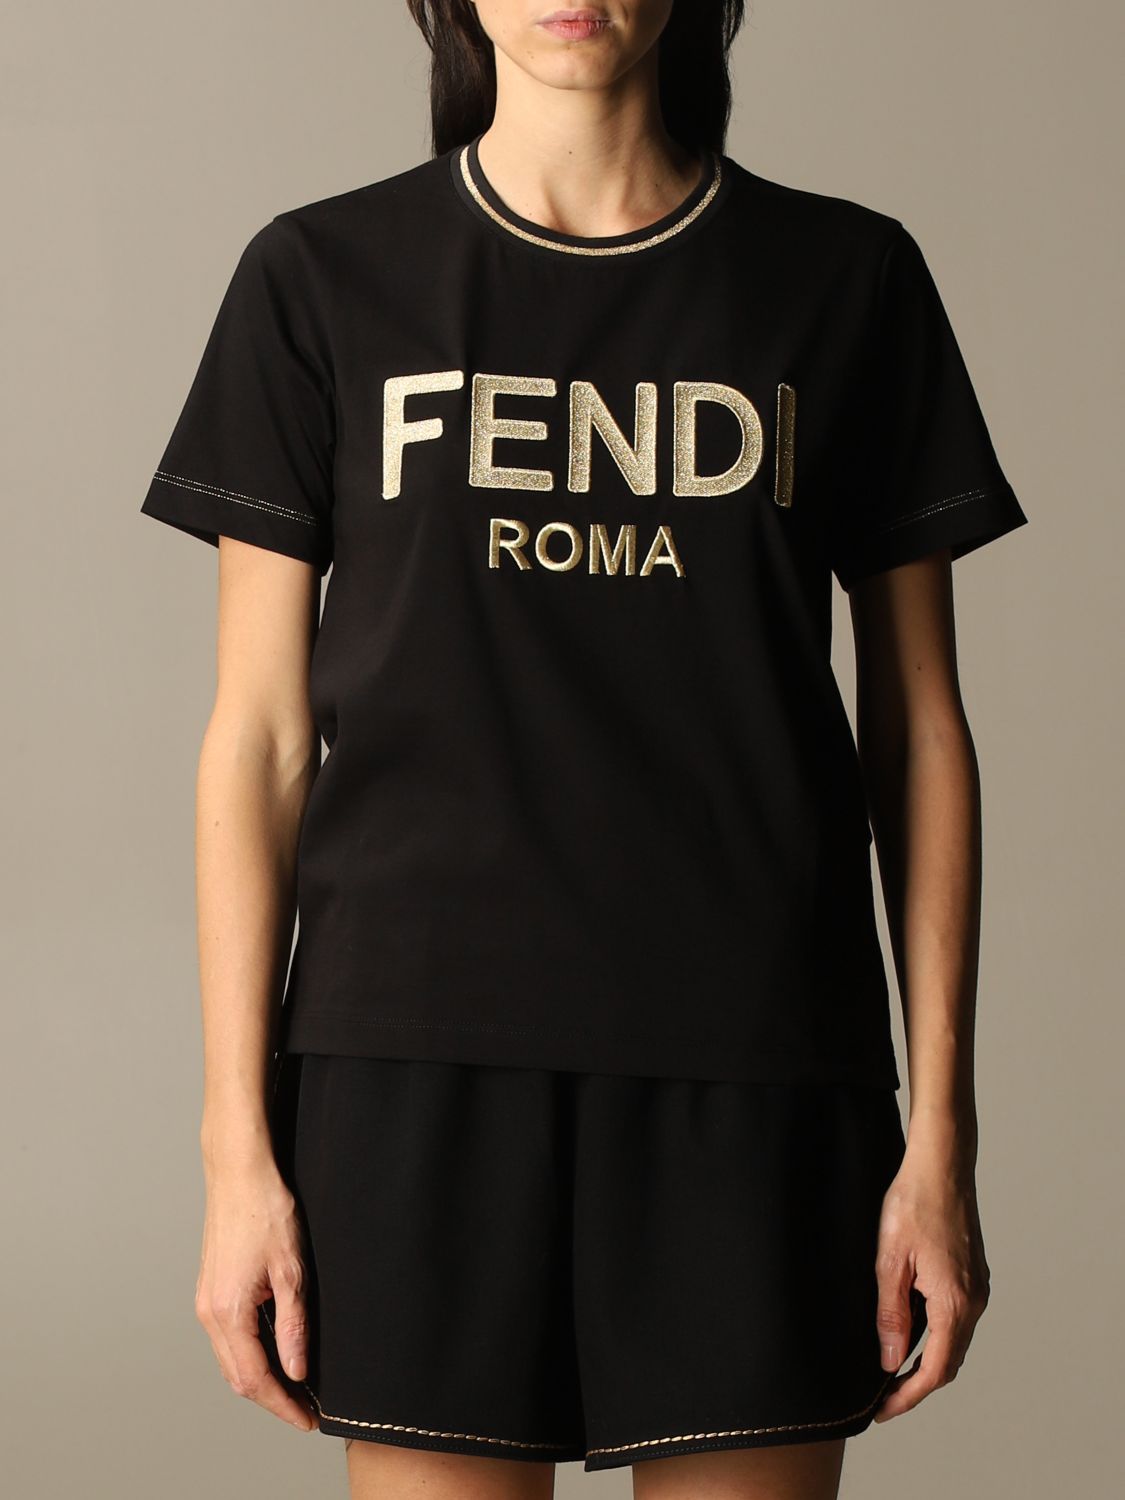 FENDI: T-shirt with Roma logo - Black | Fendi t-shirt FS7254 AC6B ...